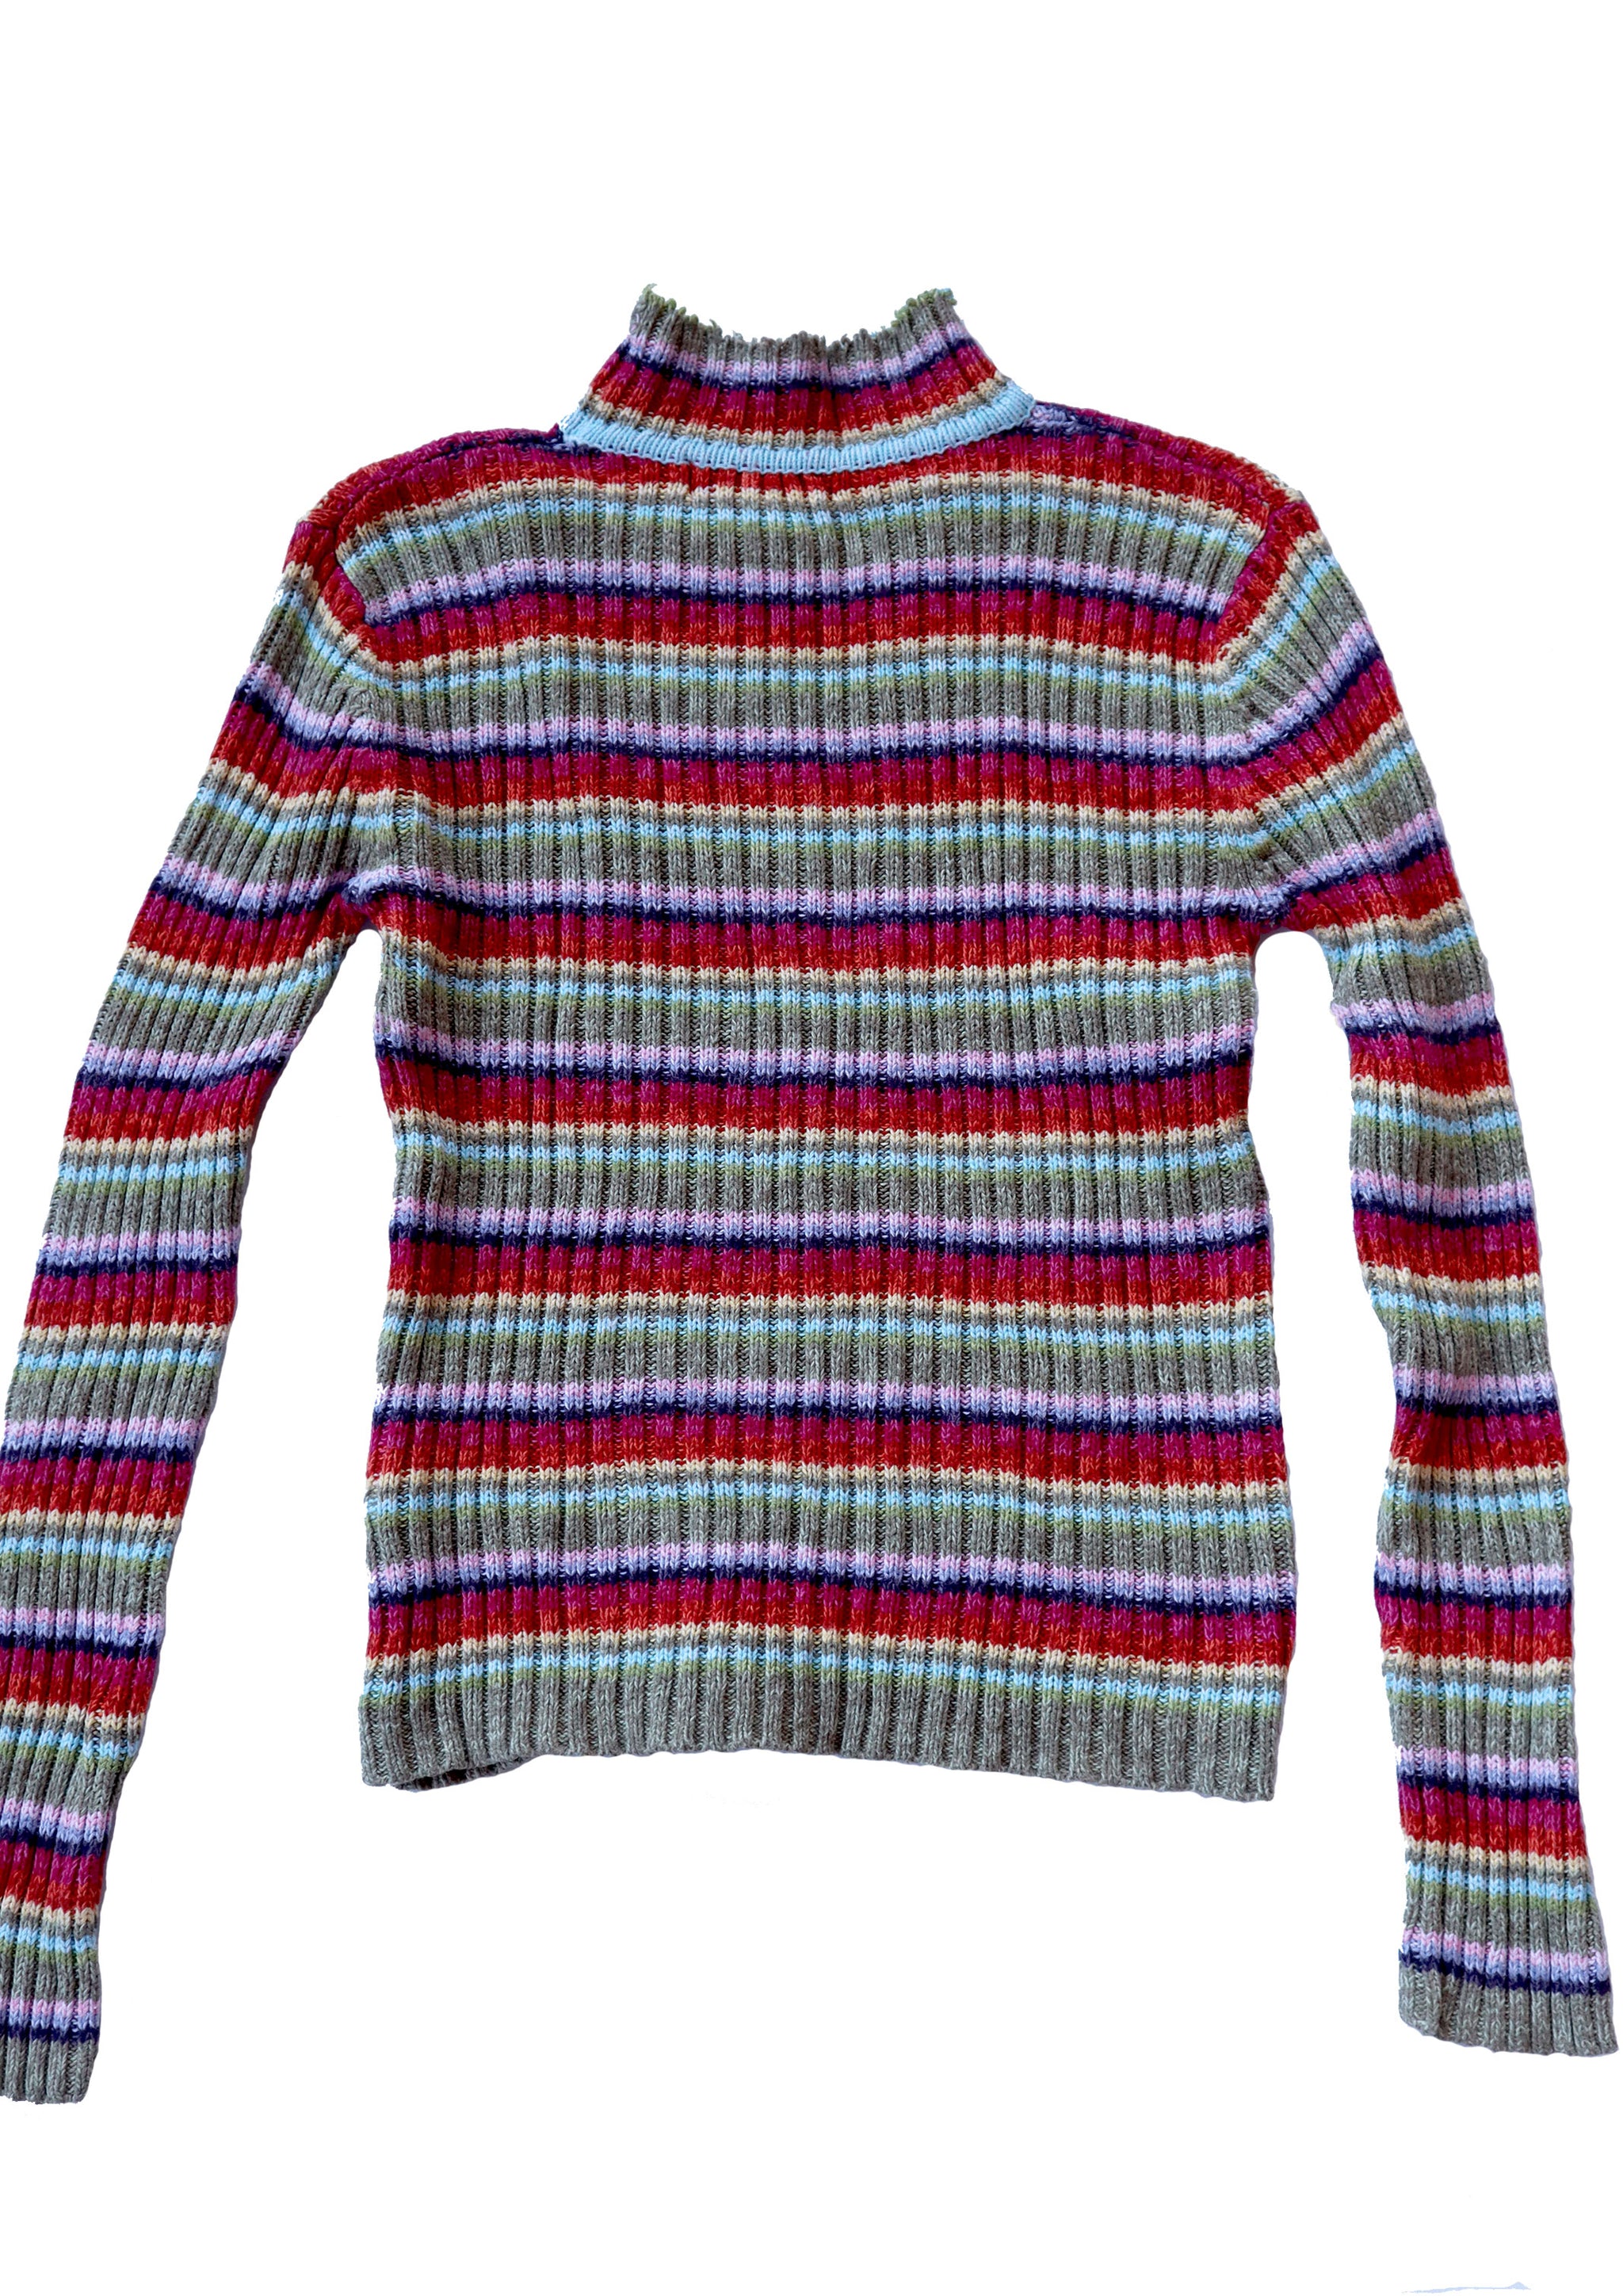 90s Striped Turtleneck Sweater